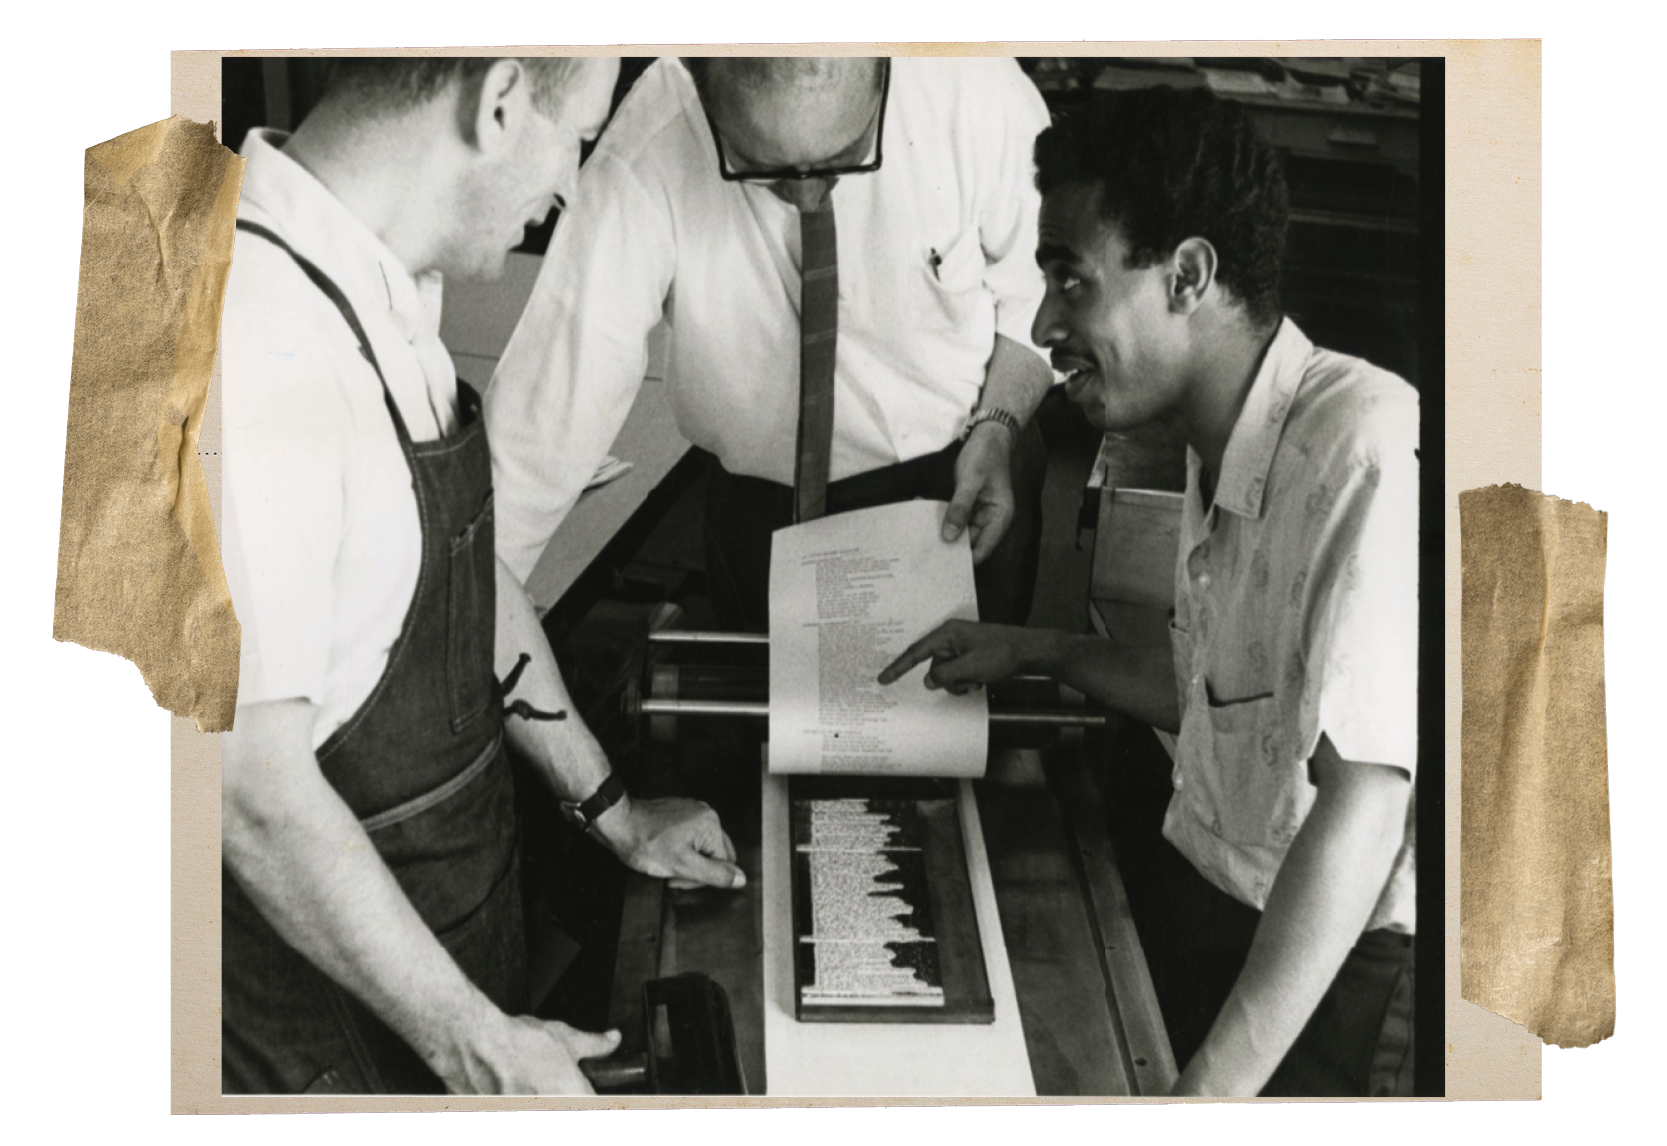 Three men in white shirts gathered around a print press.